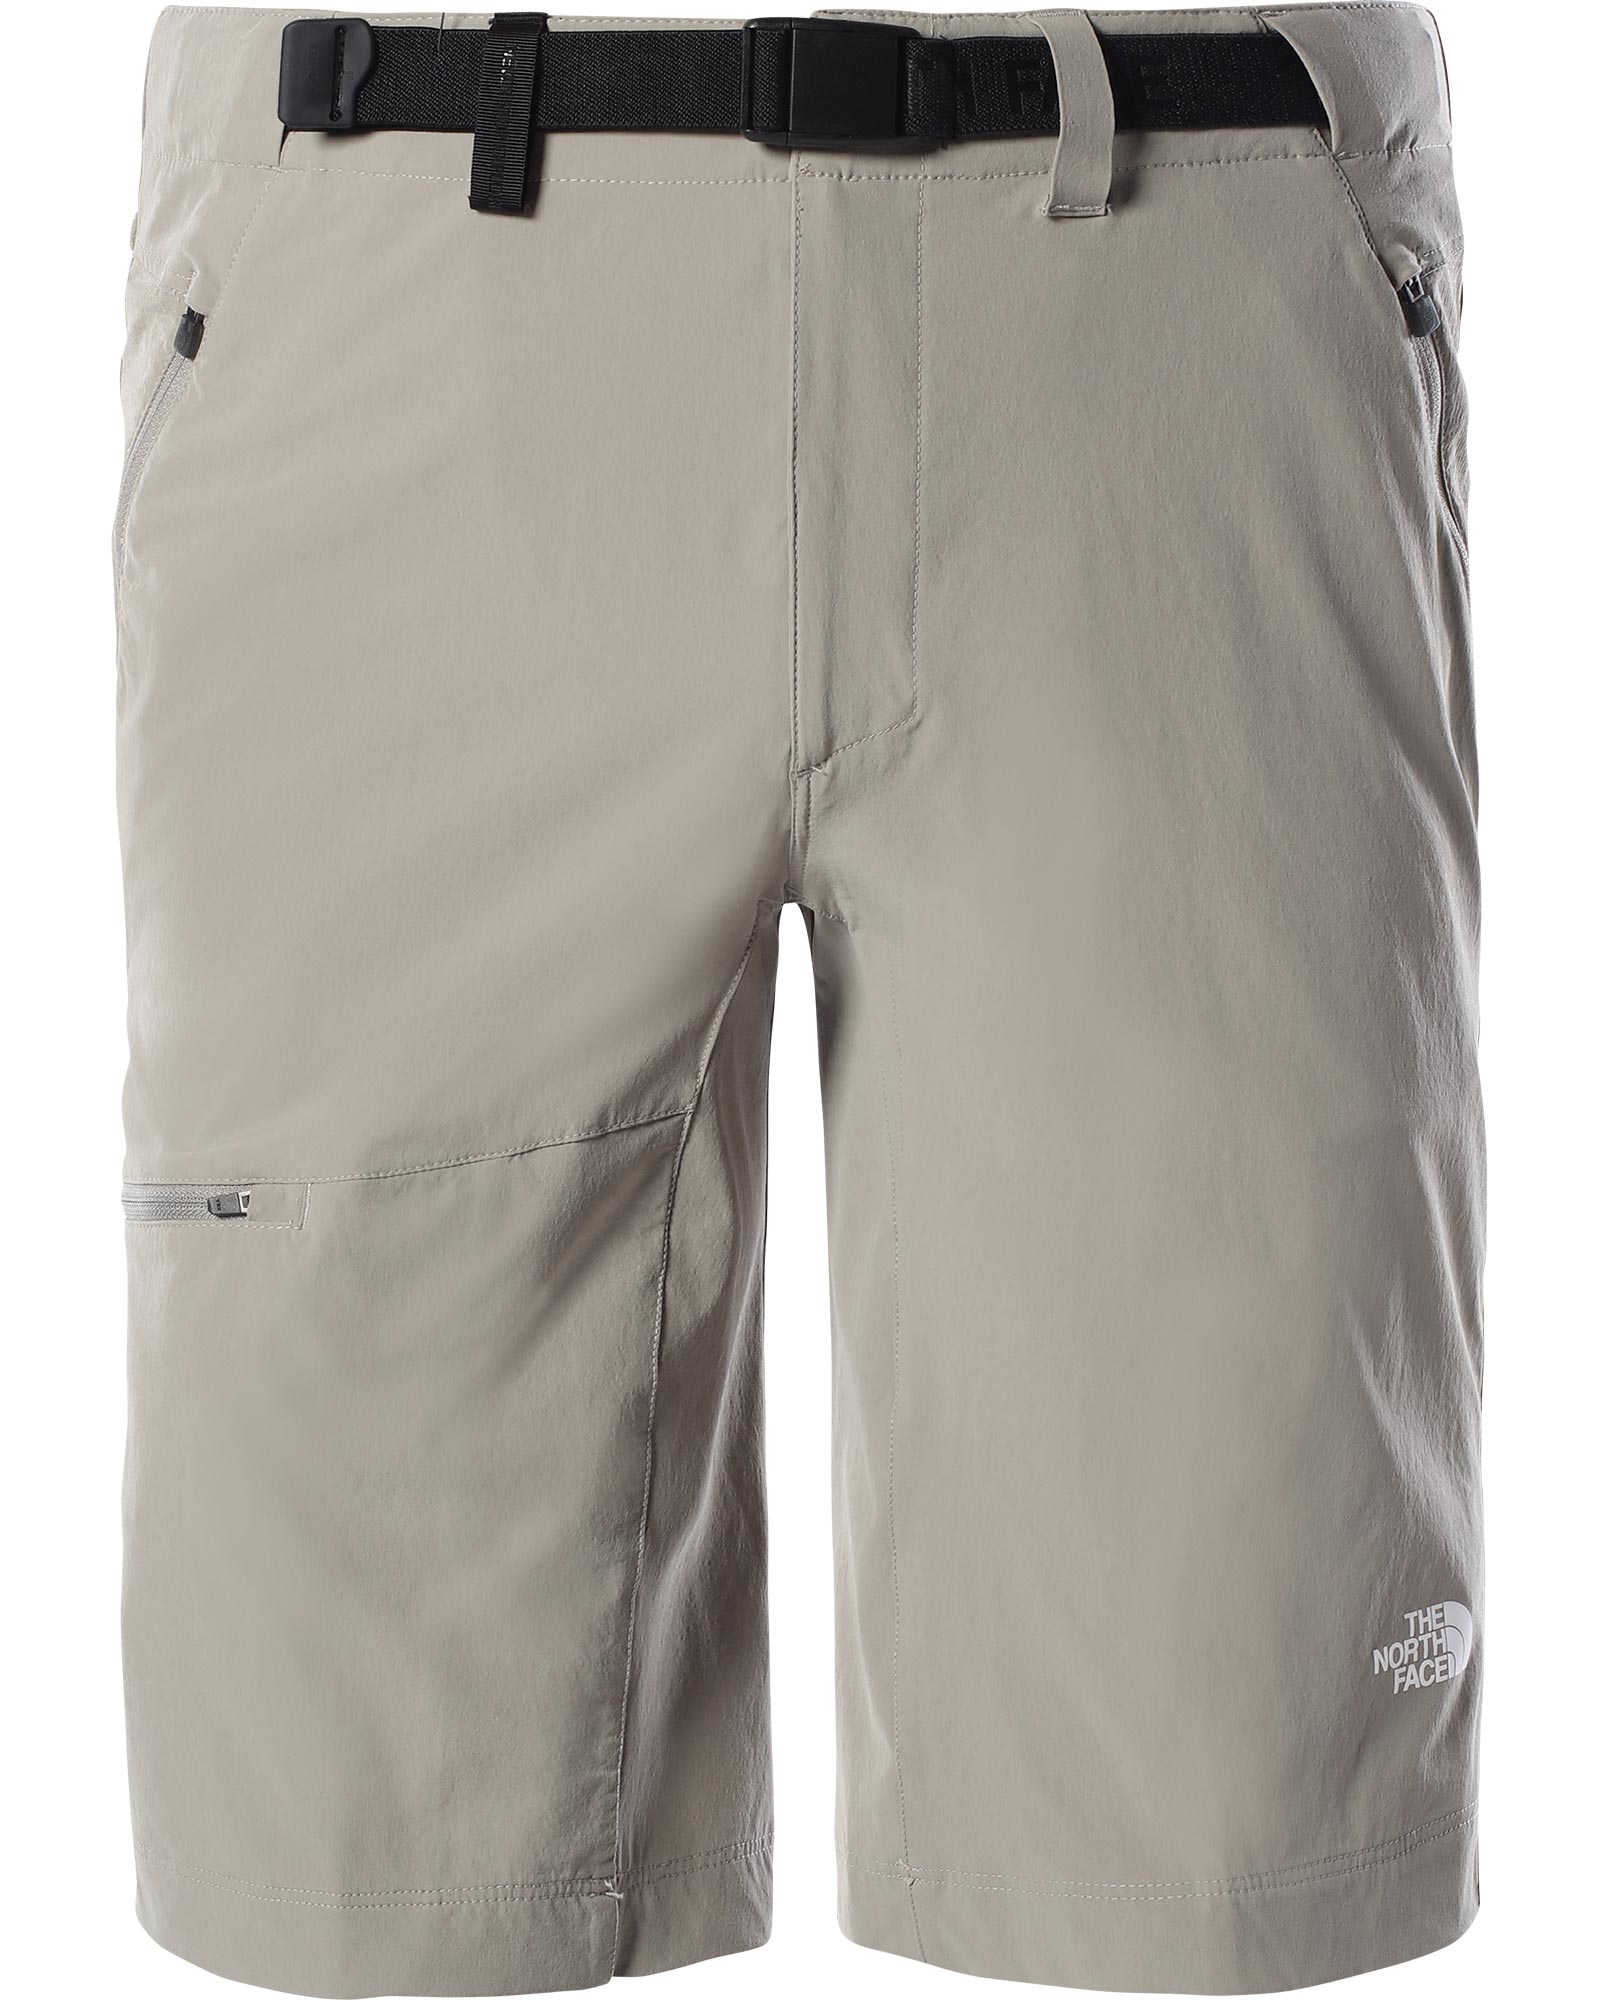 The North Face Speedlight Men’s Shorts - Mineral Grey 30"